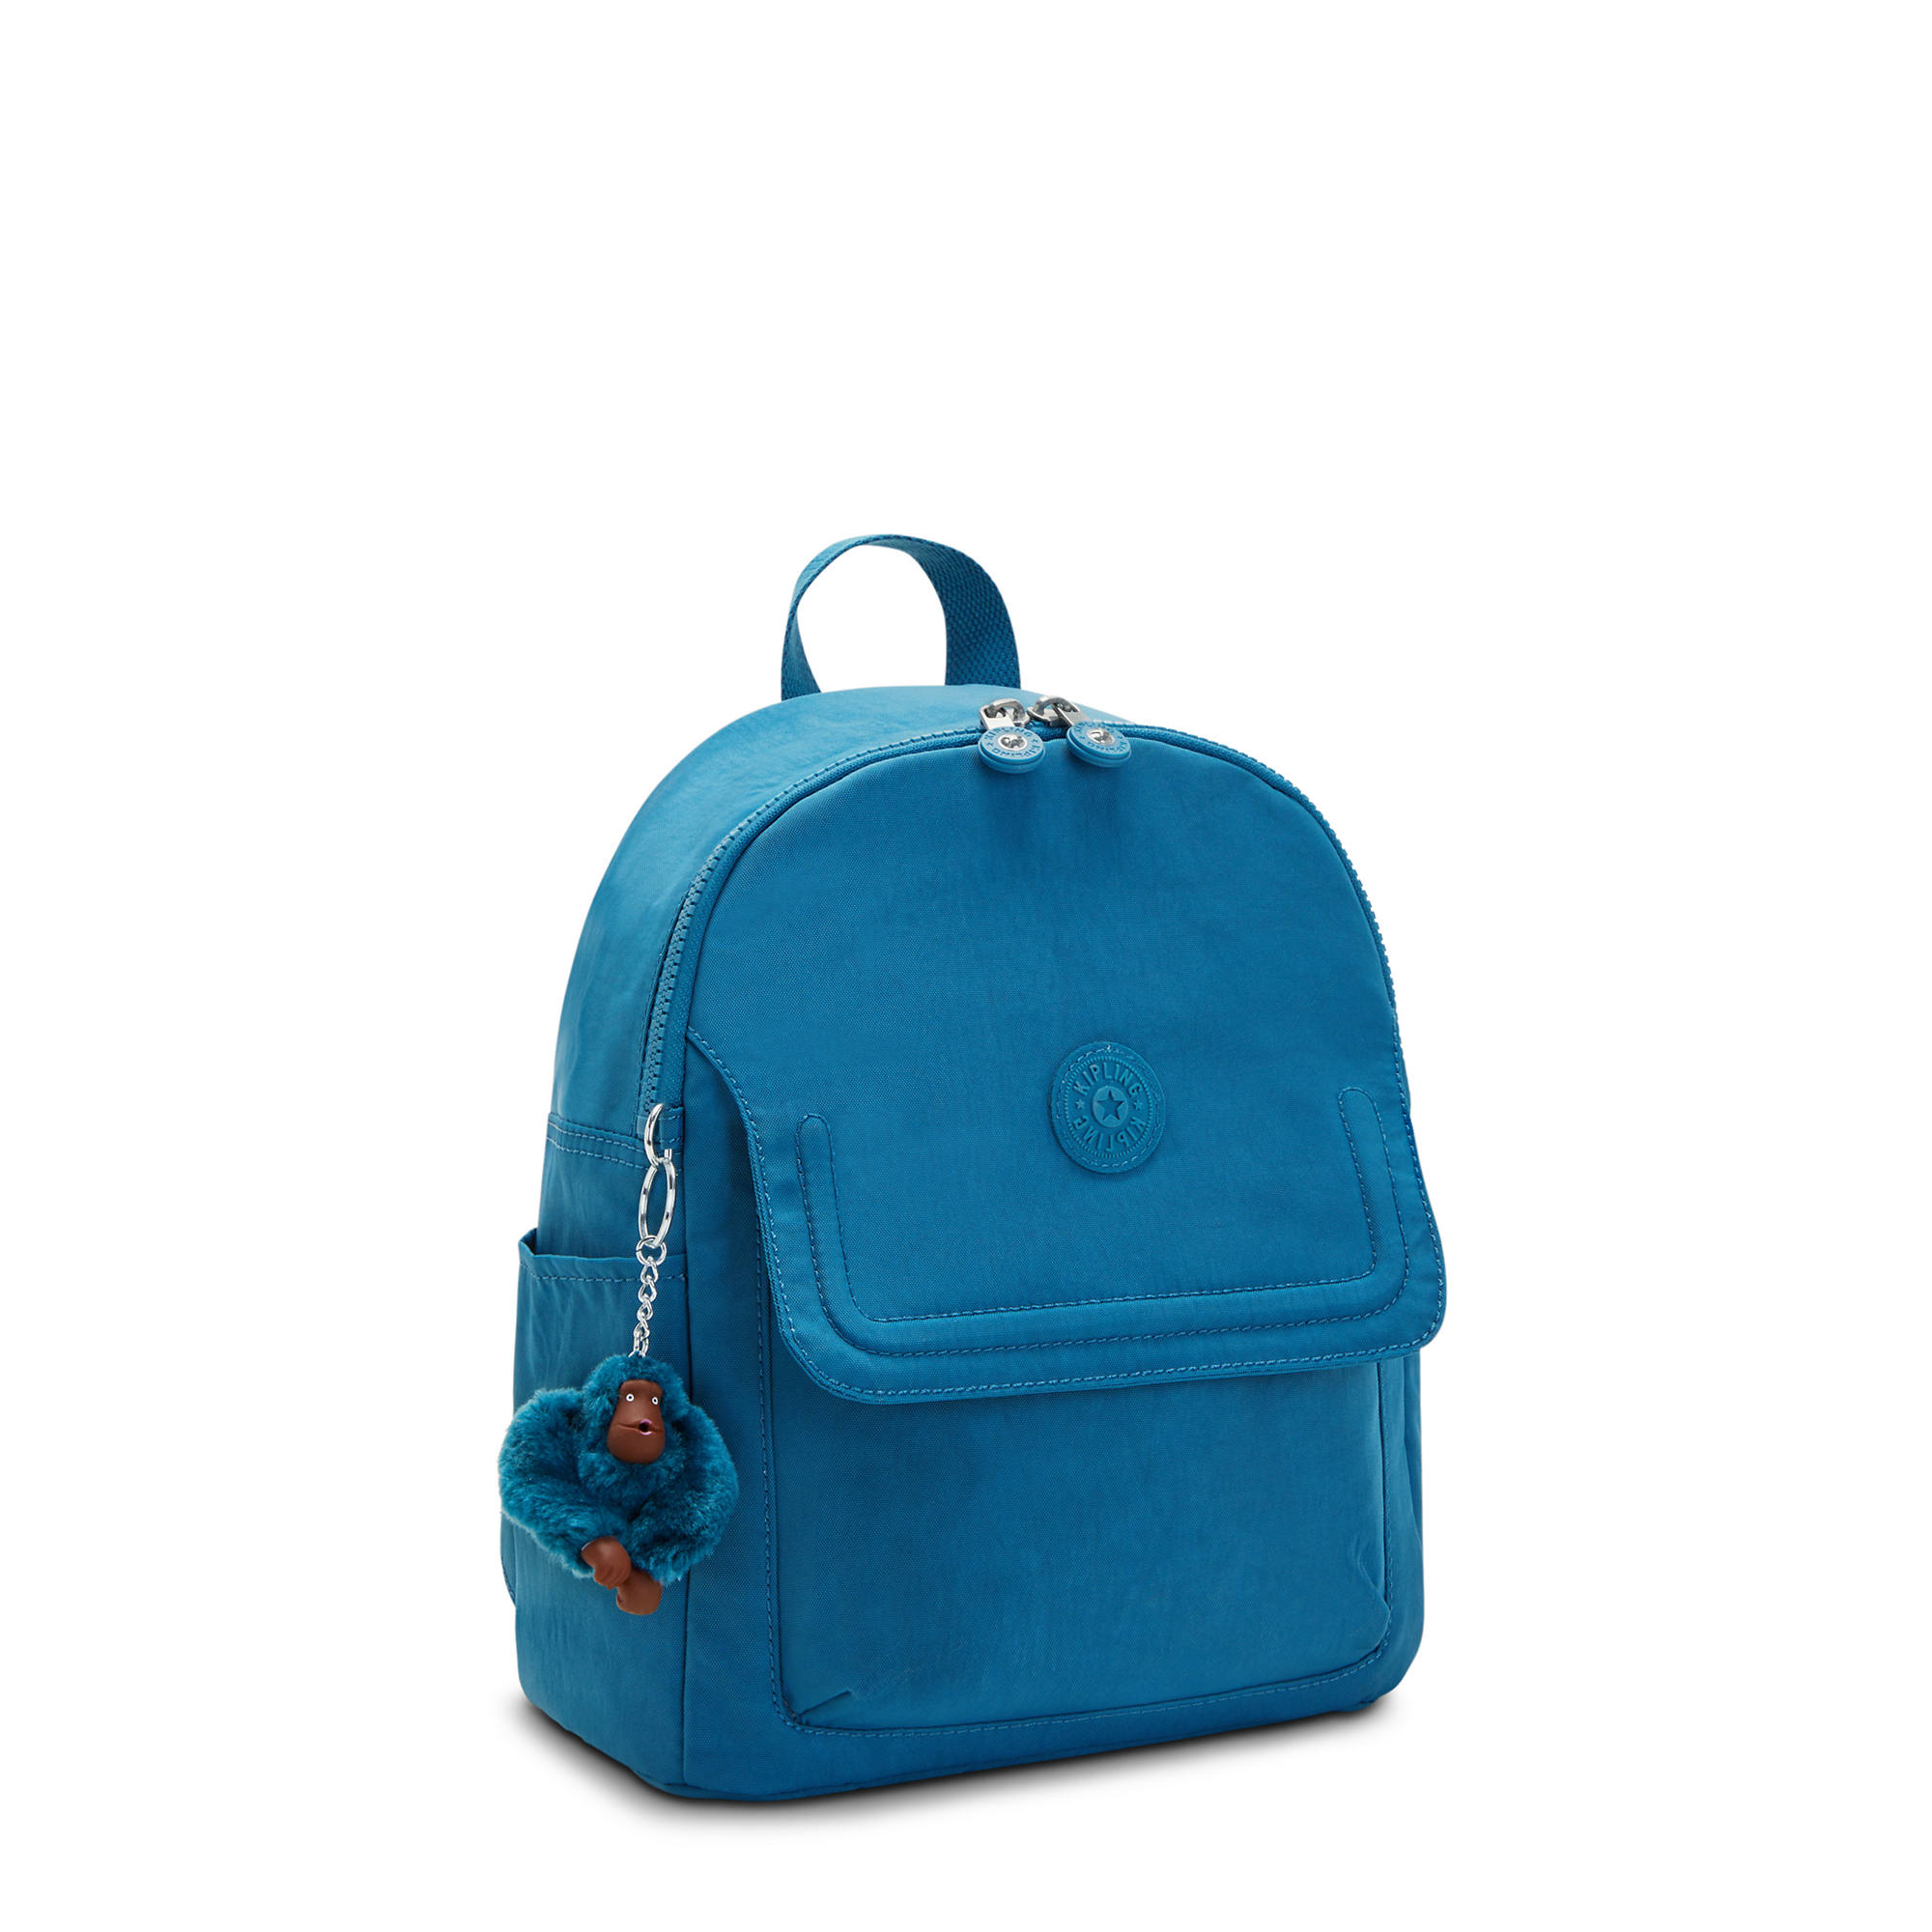 Kipling Matta Up Backpack | eBay